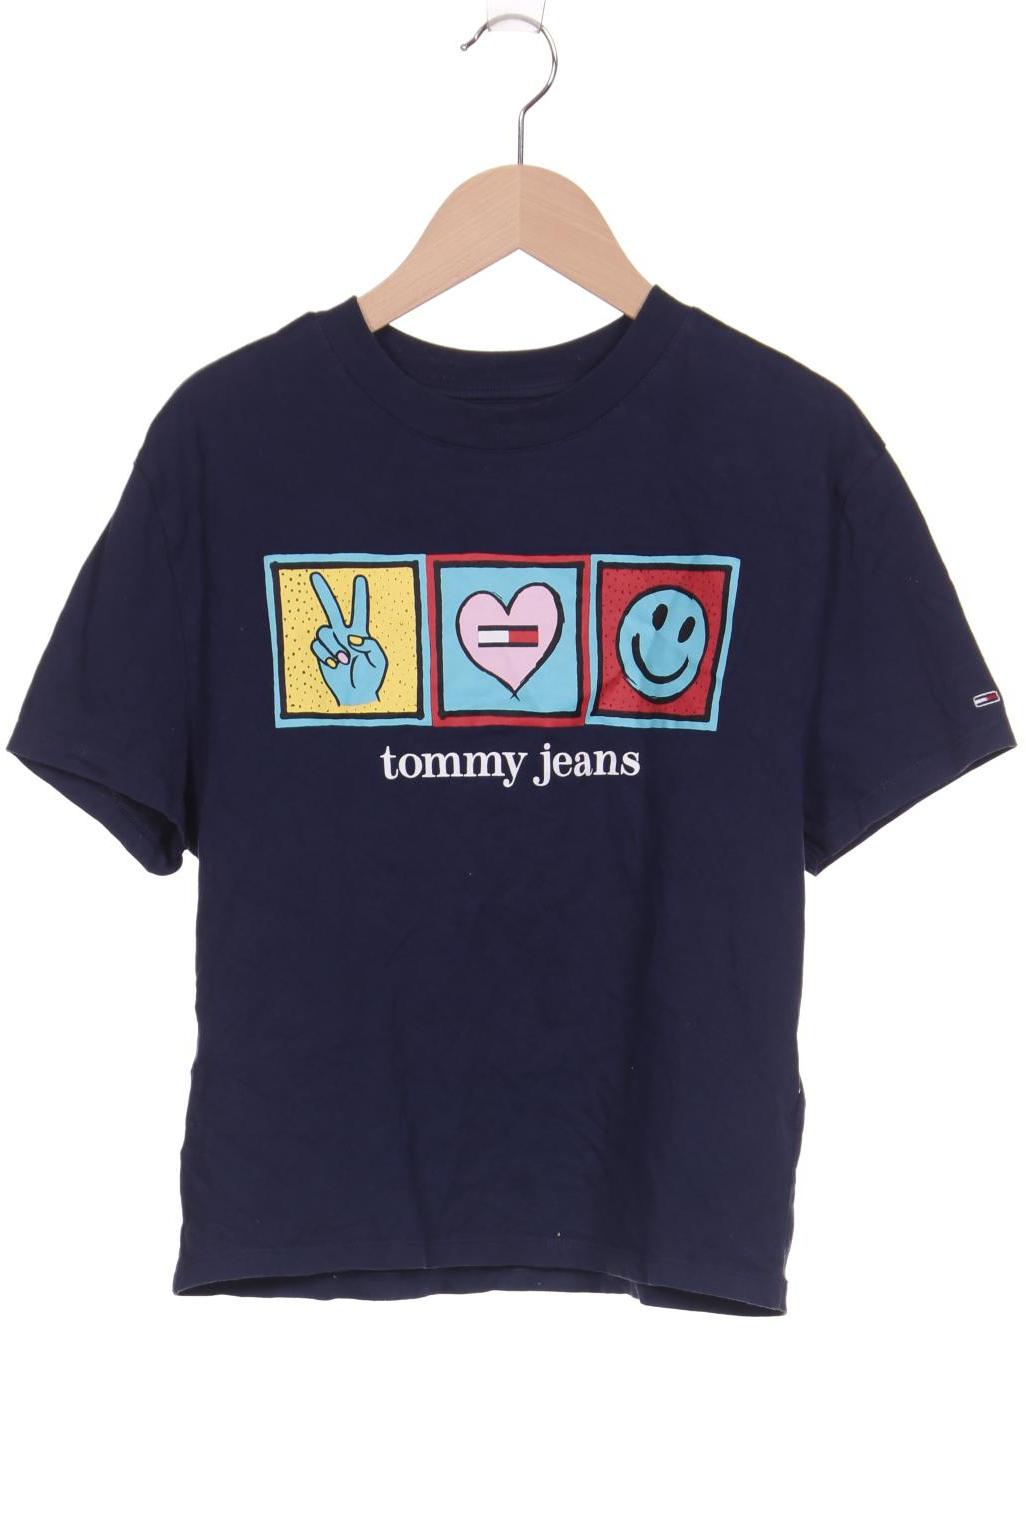 Tommy Jeans Damen T-Shirt, marineblau, Gr. 122 von Tommy Jeans